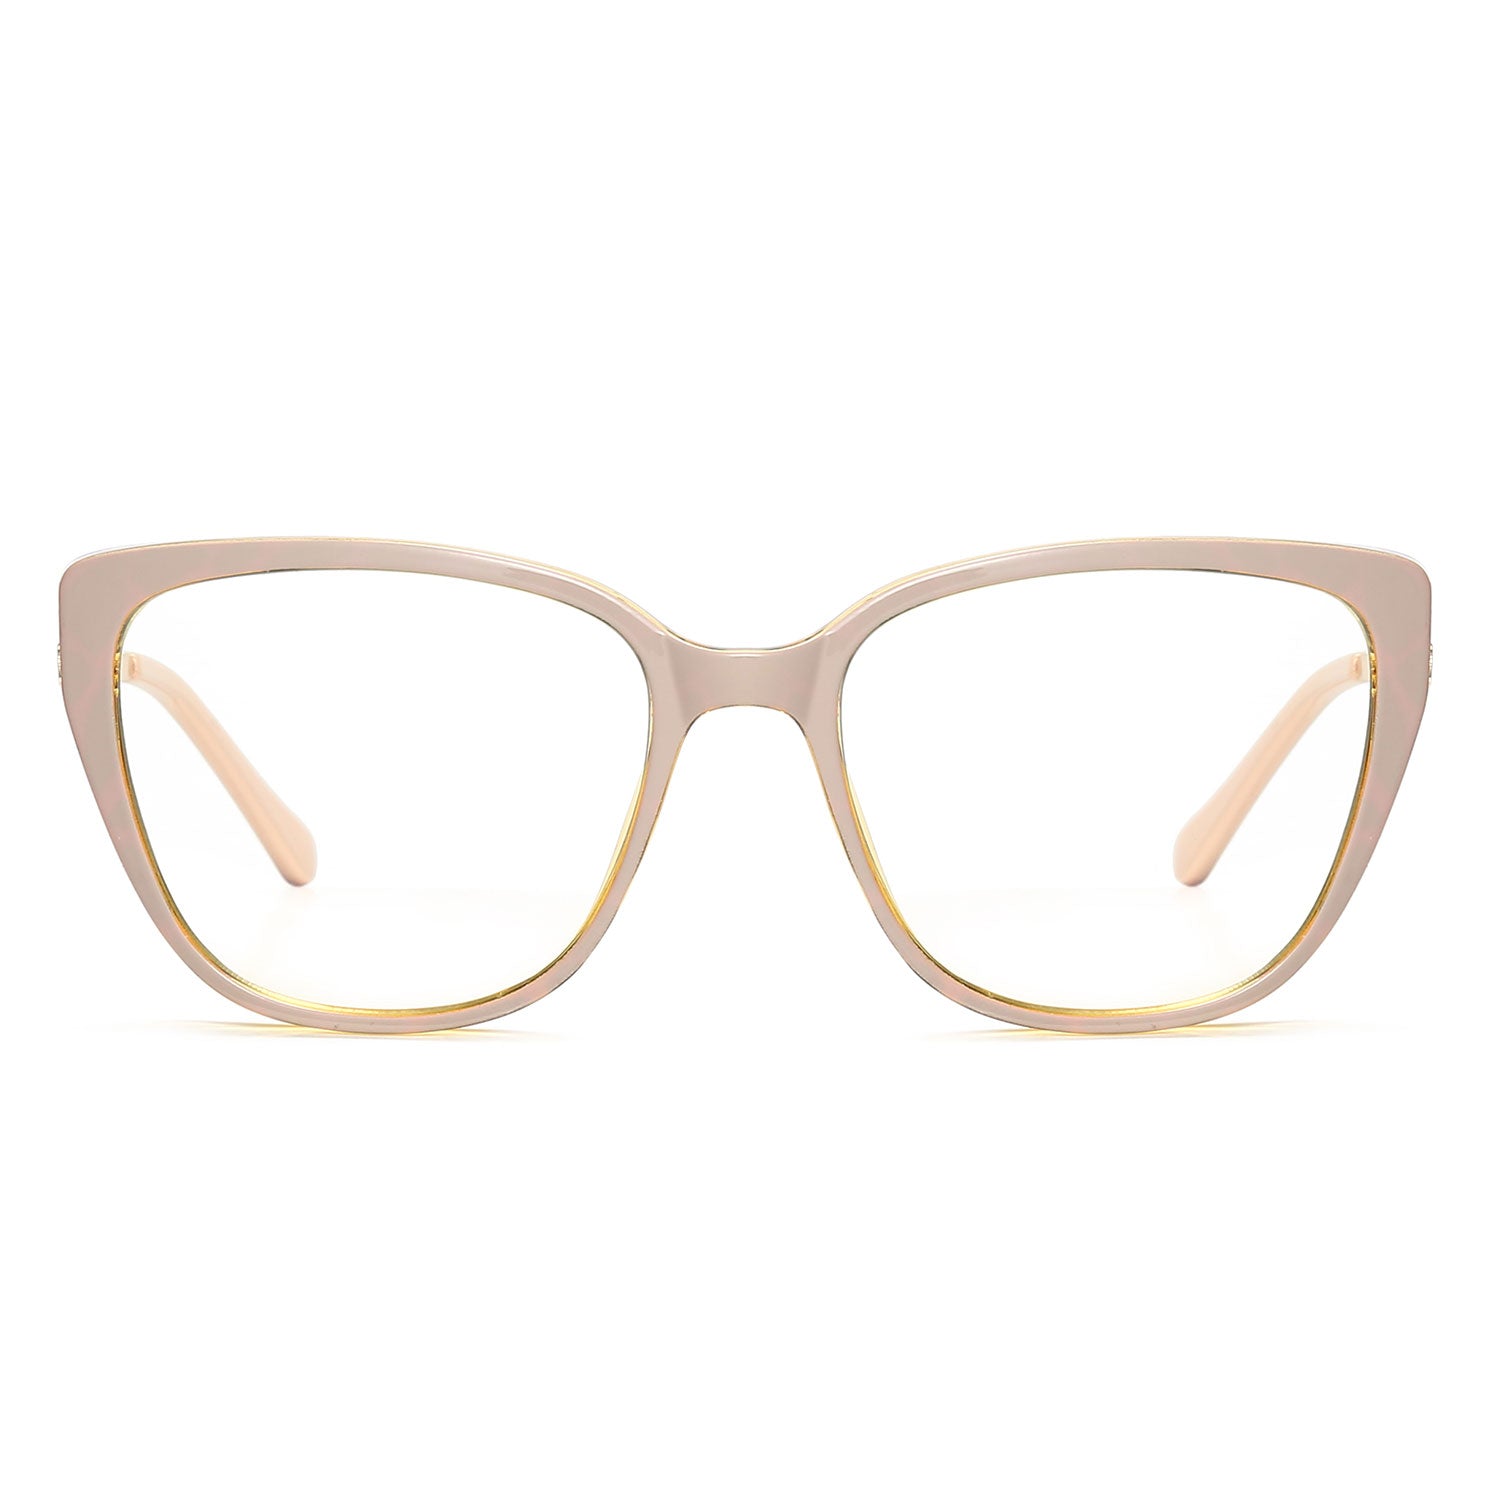 eyeglasses oval frames